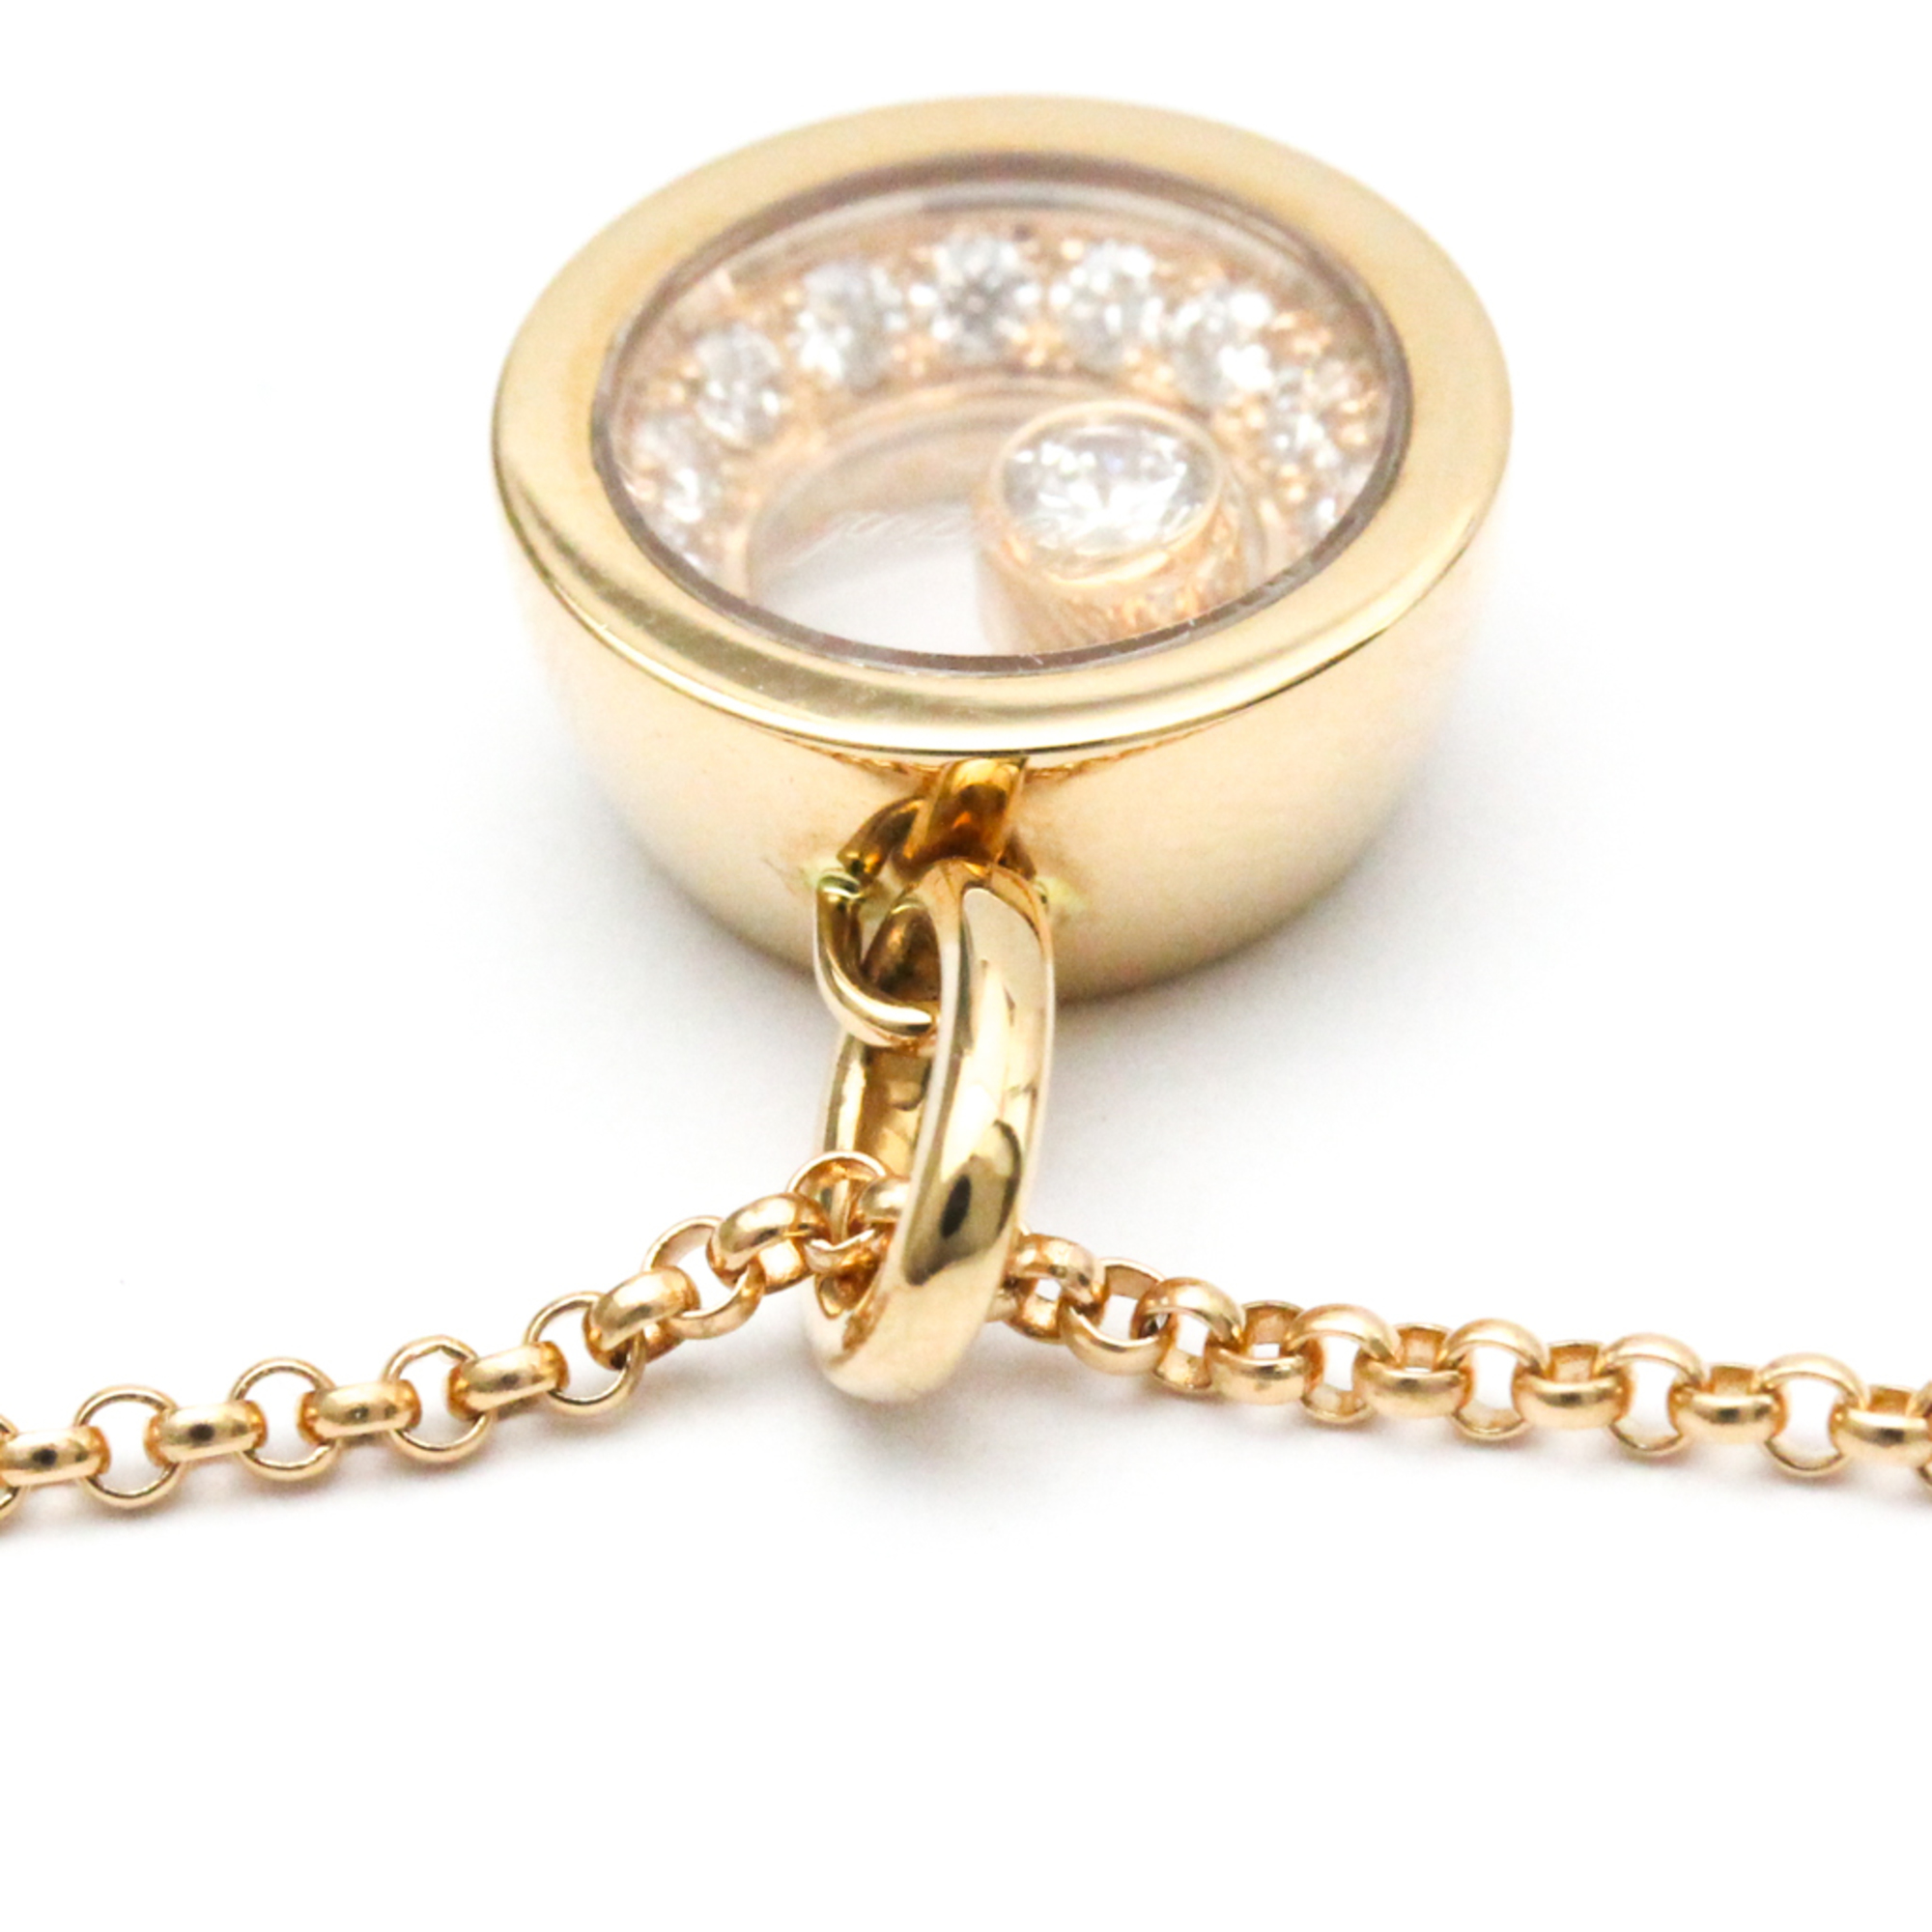 Chopard Happy Diamonds Necklace 797789/5001 Pink Gold (18K) Diamond Men,Women Fashion Pendant Necklace Carat/0.32 (Pink Gold)